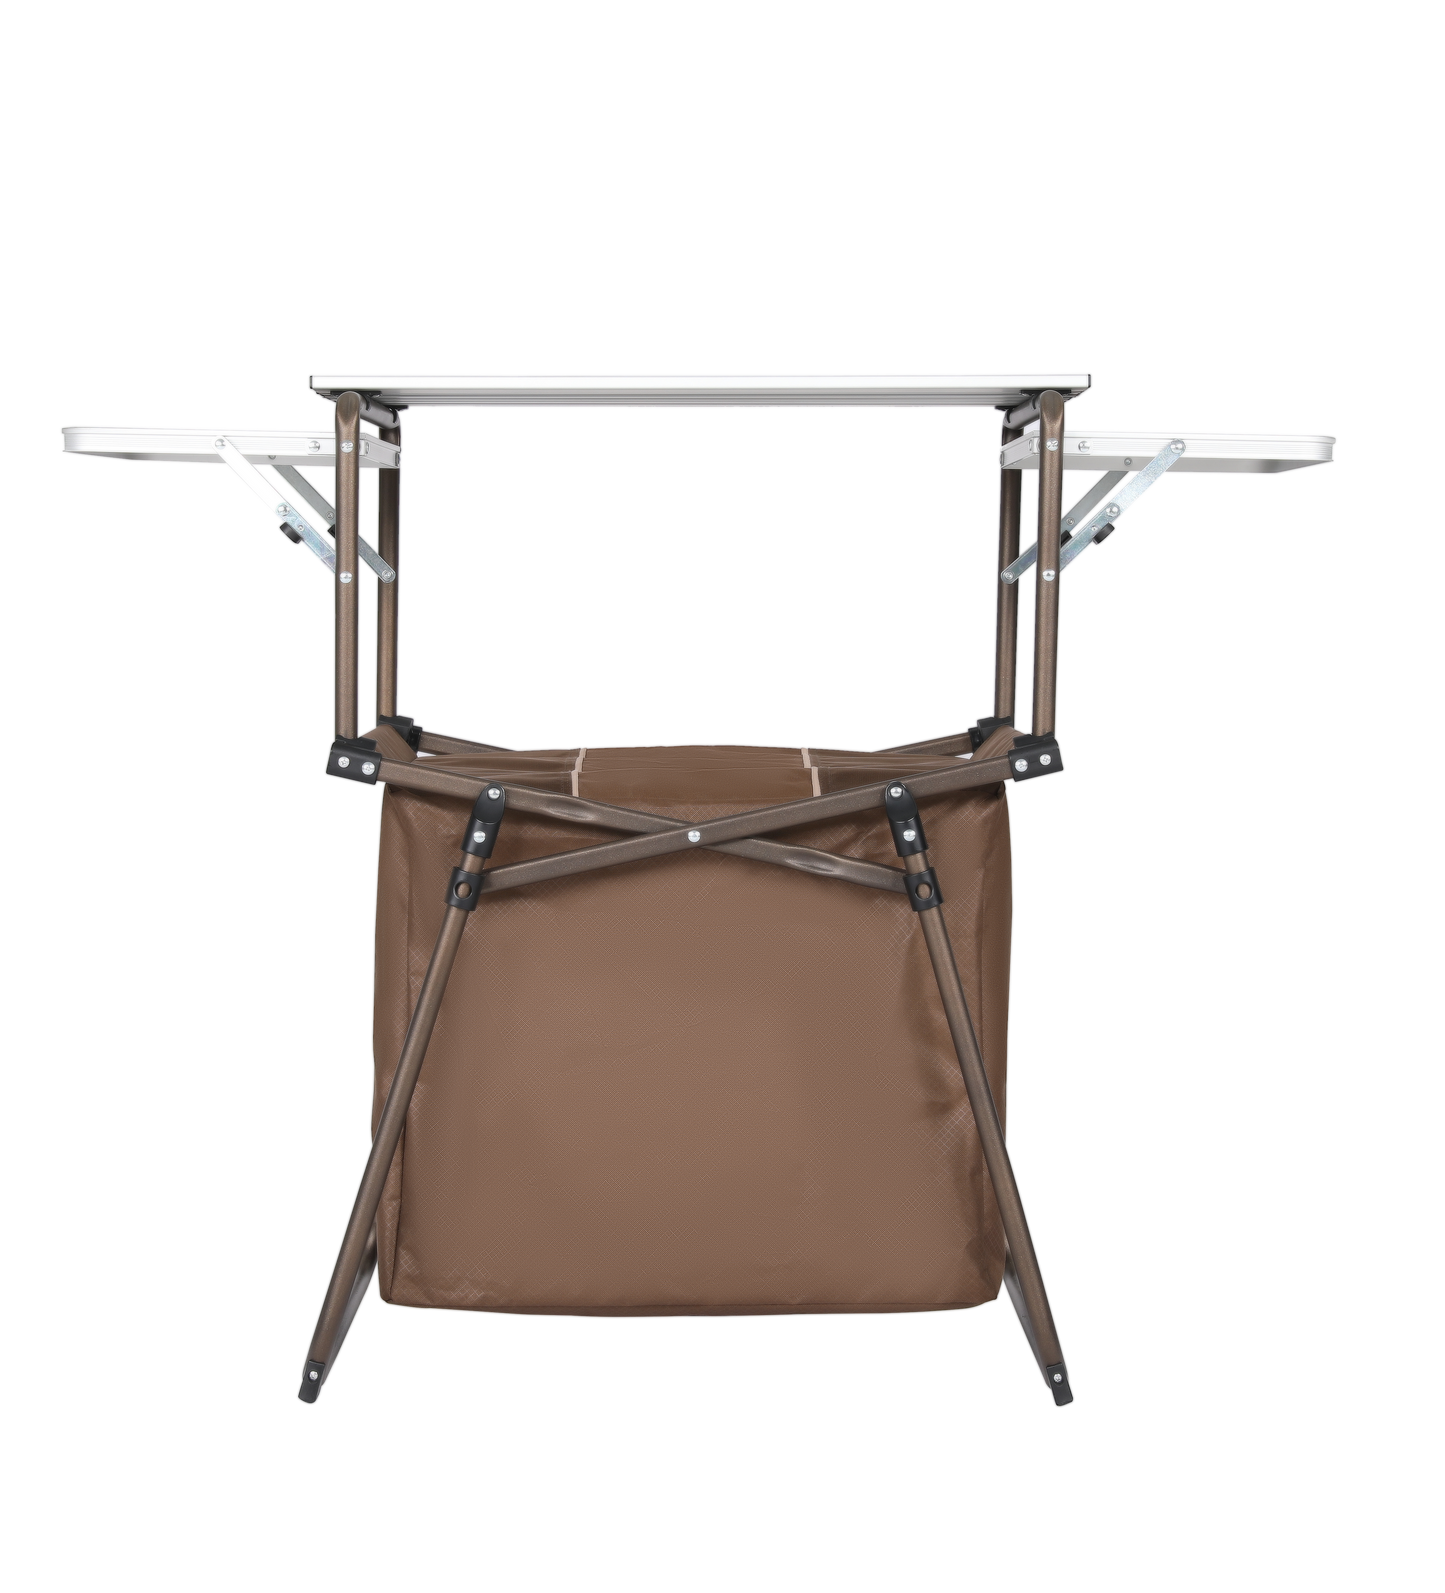 Timber Ridge® Poplar Portable Camp Table, Brown